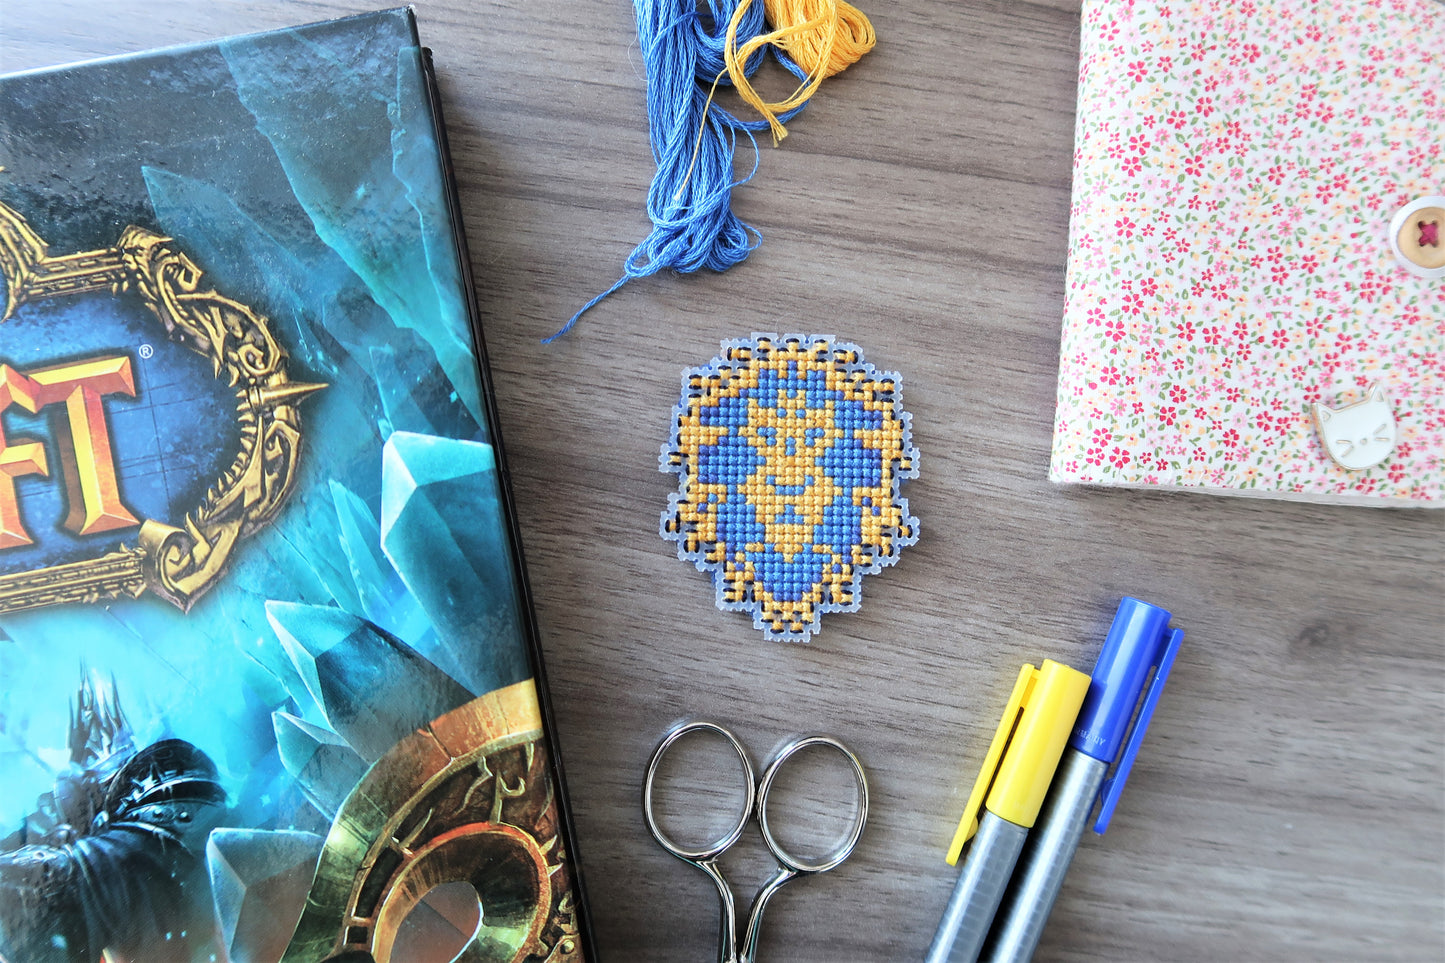 Cross-stitch pattern - The Alliance from World of Warcraft